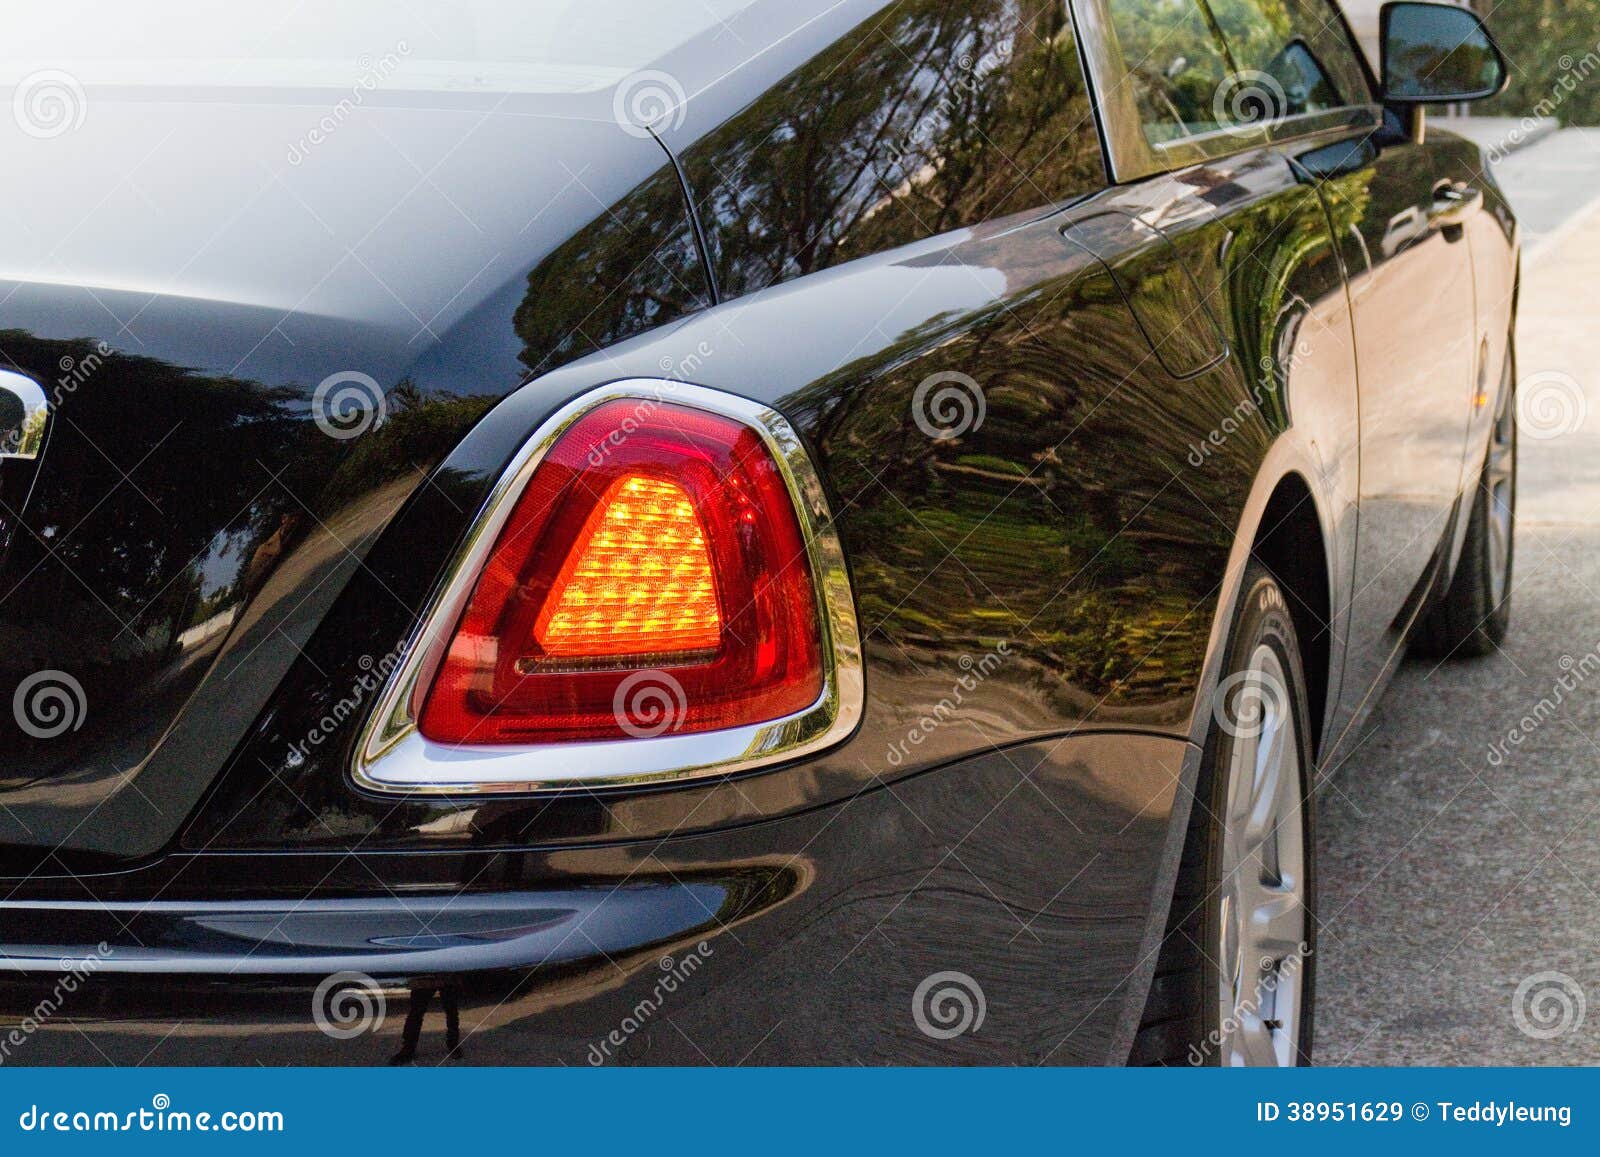 Wraith Led Light Editorial Stock Image of automobile, black: 38951629